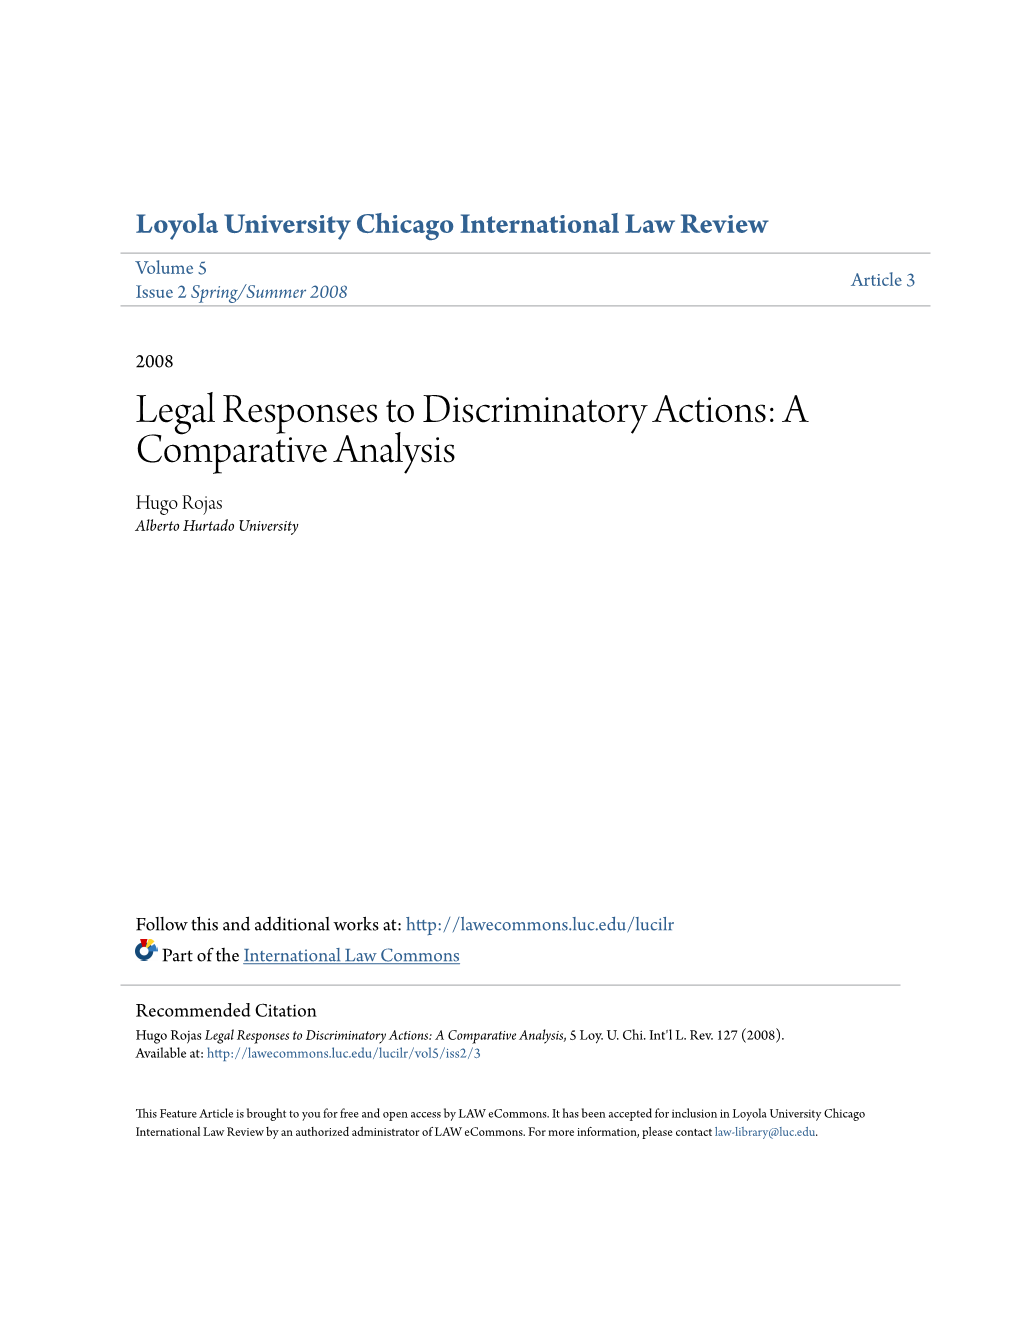 Legal Responses to Discriminatory Actions: a Comparative Analysis Hugo Rojas Alberto Hurtado University